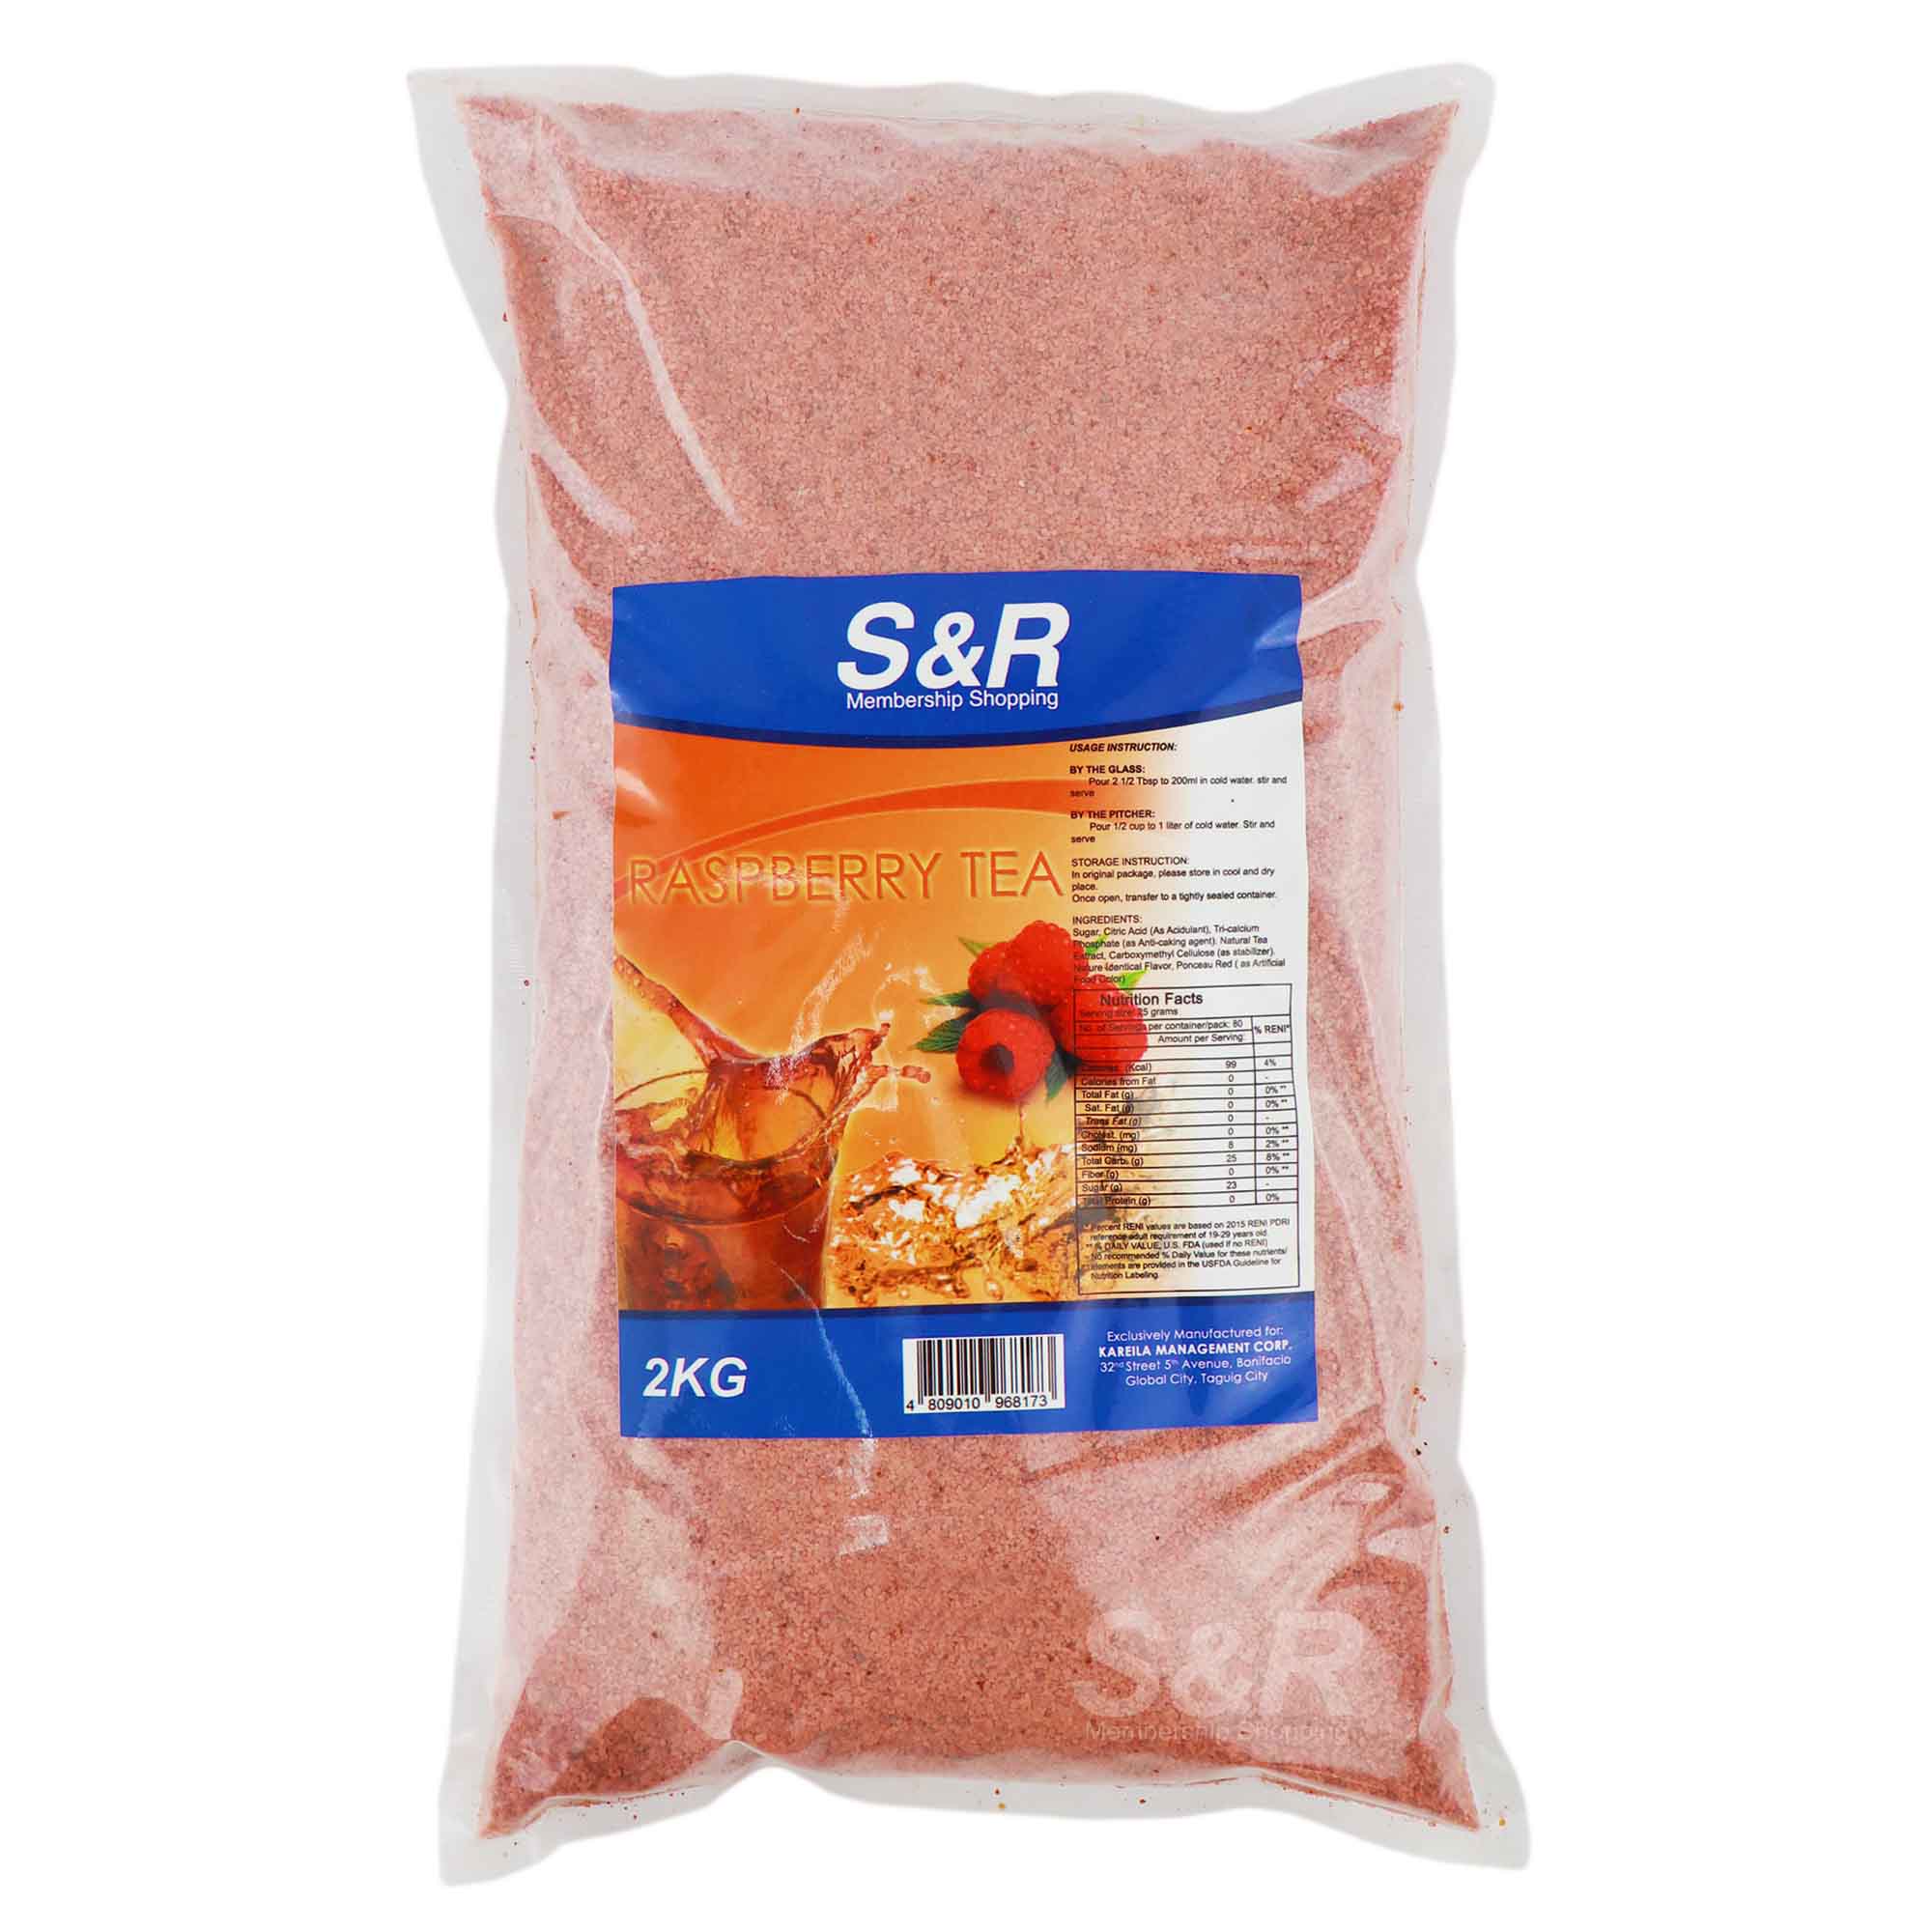 S&R Raspberry Tea 2kg